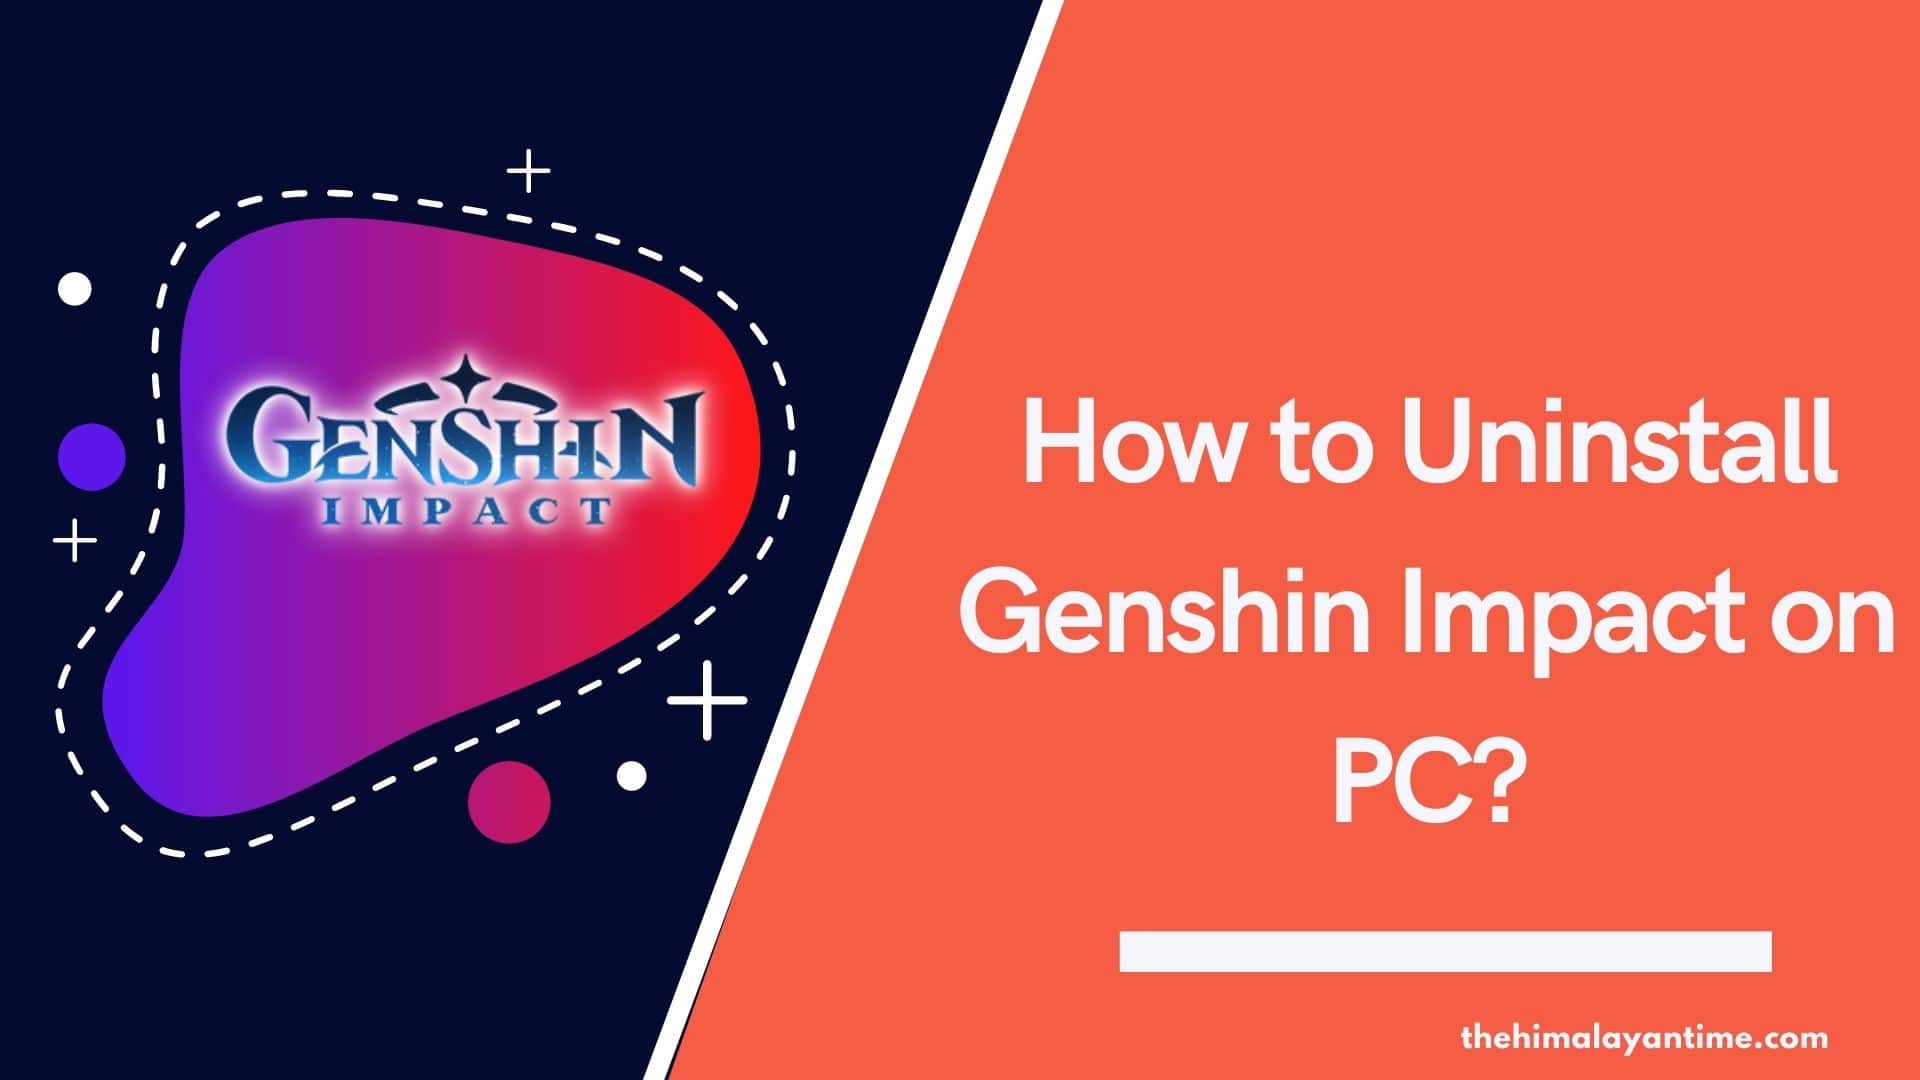 How to Uninstall Genshin Impact on PC?